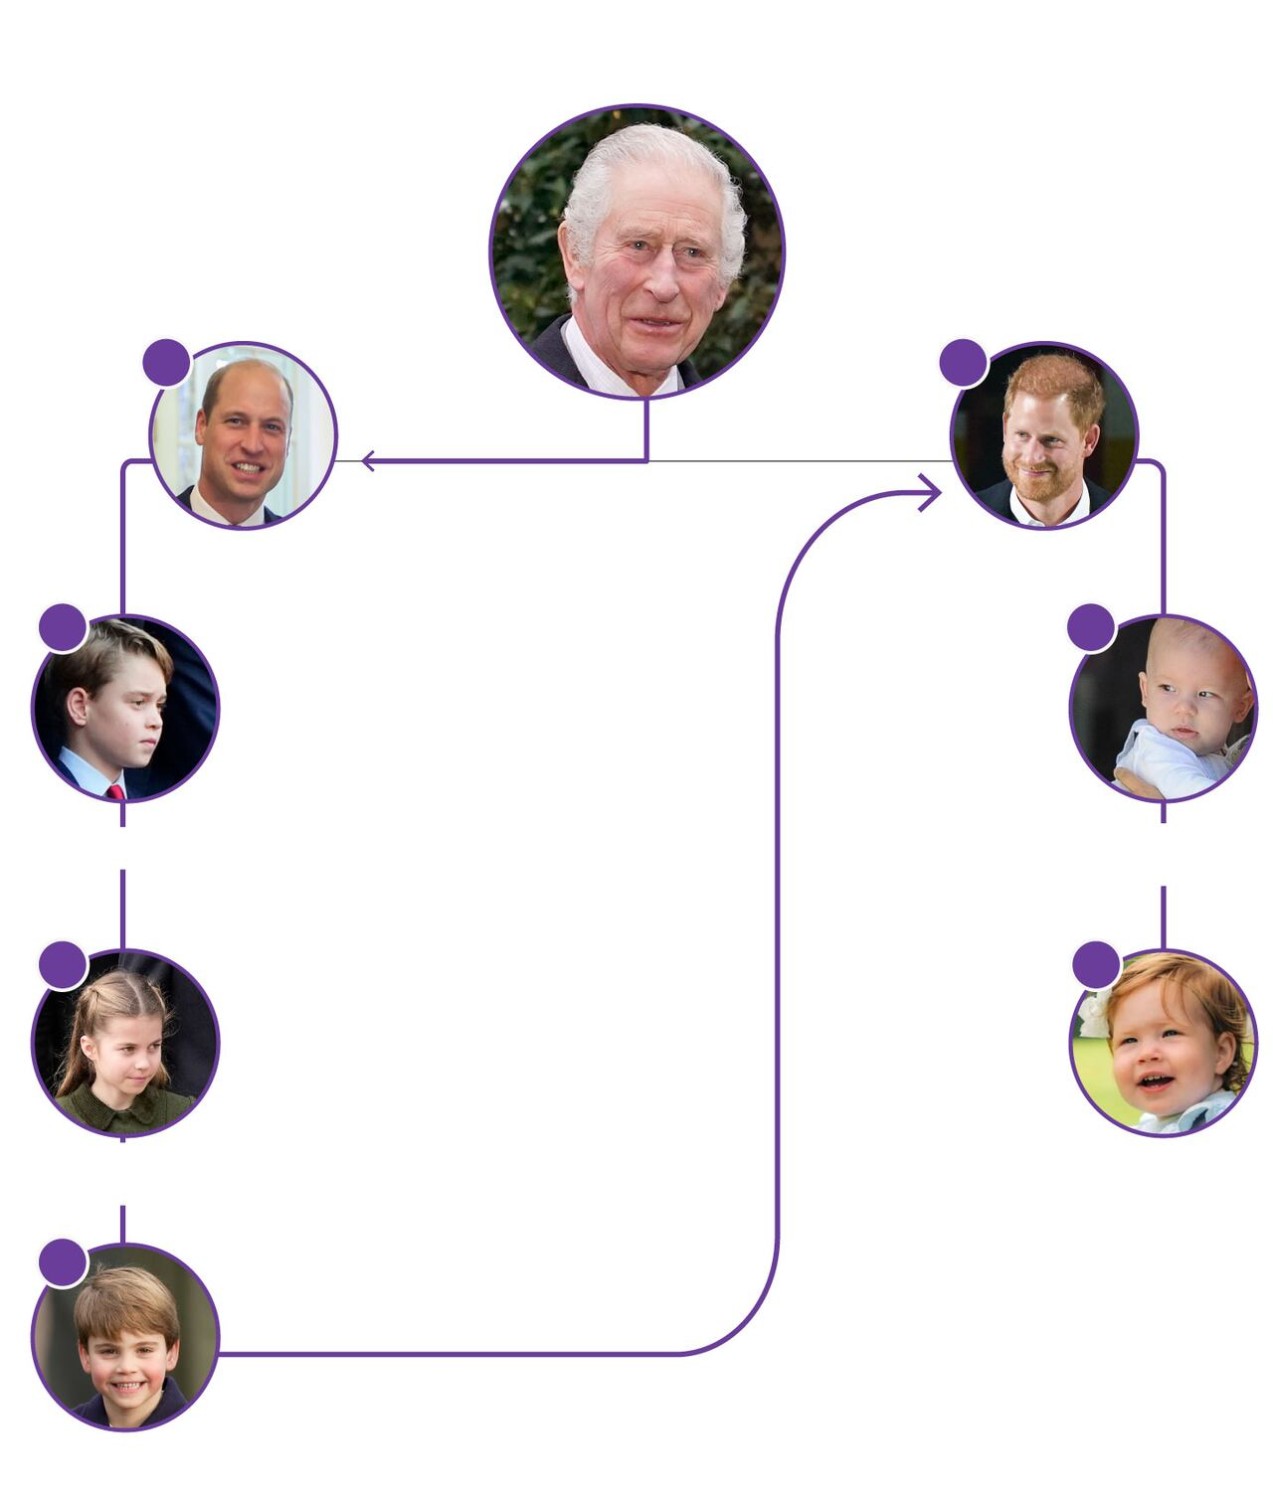 Source: British Royal Family (CBC